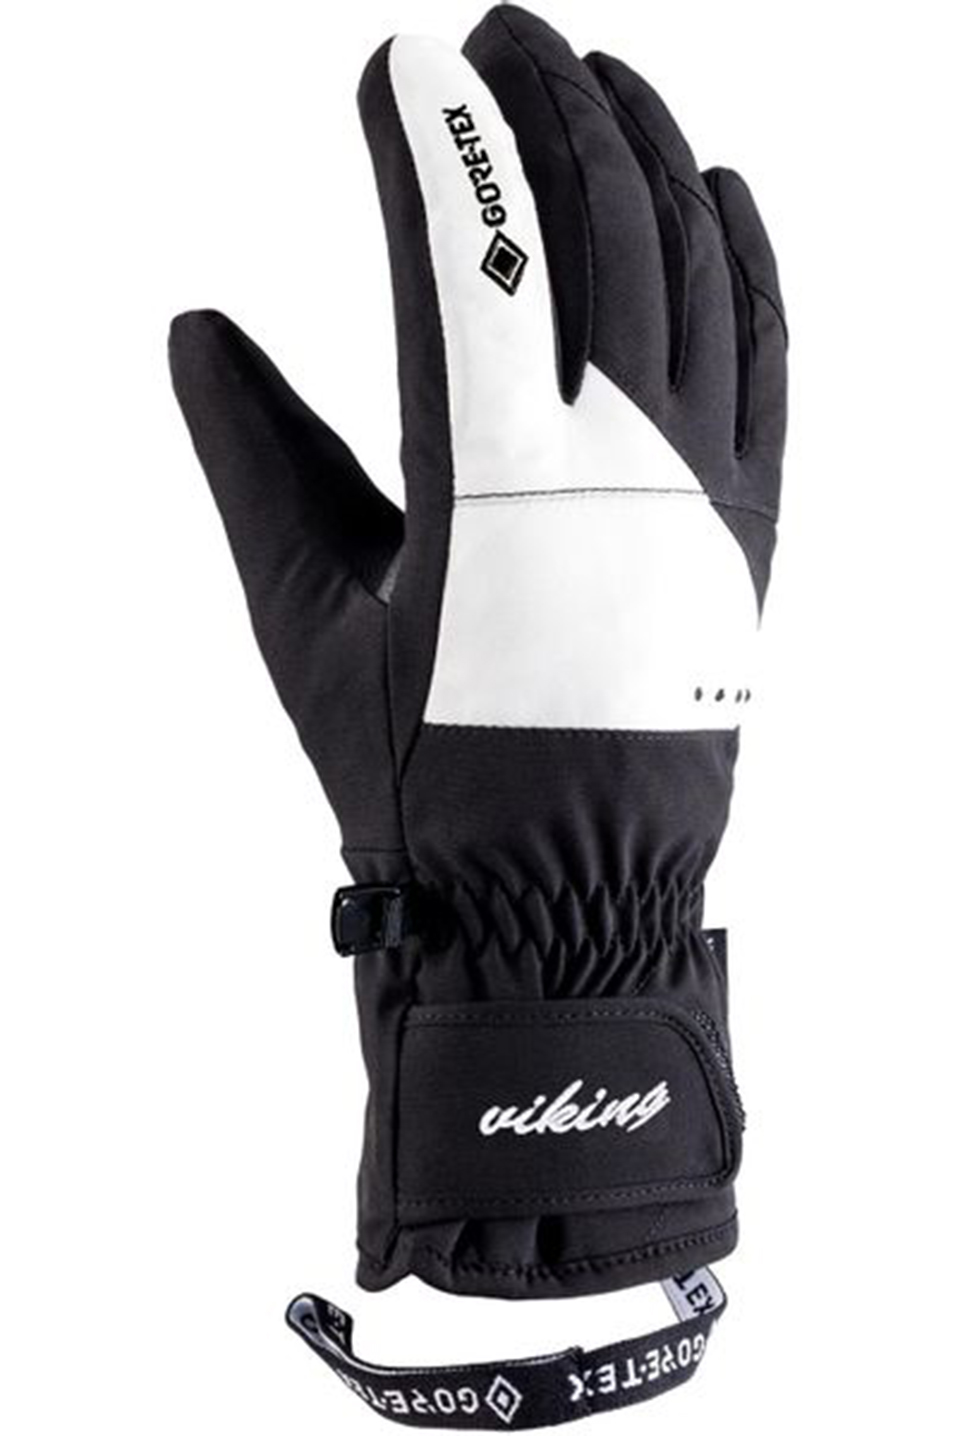 Перчатки горнолыжные Viking Sherpa GTX женские black/white - 150229797-01